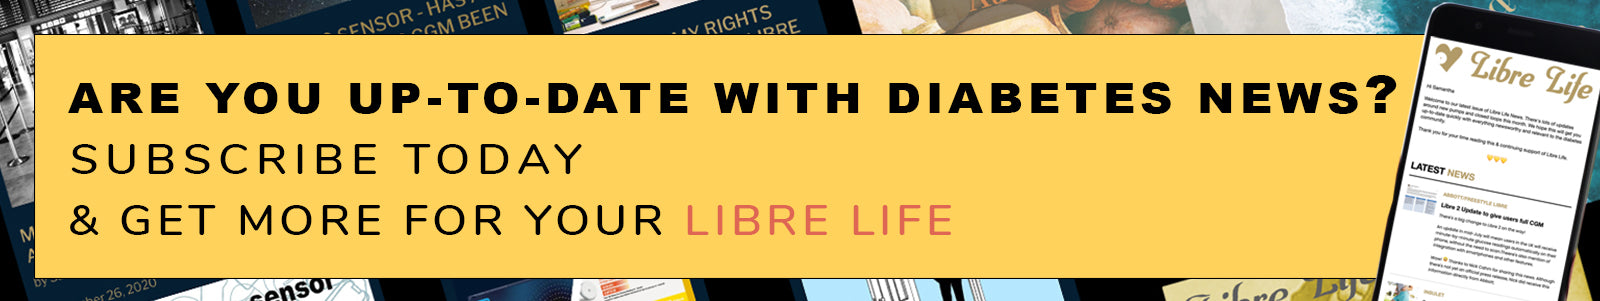 Libre Life Banner Advert